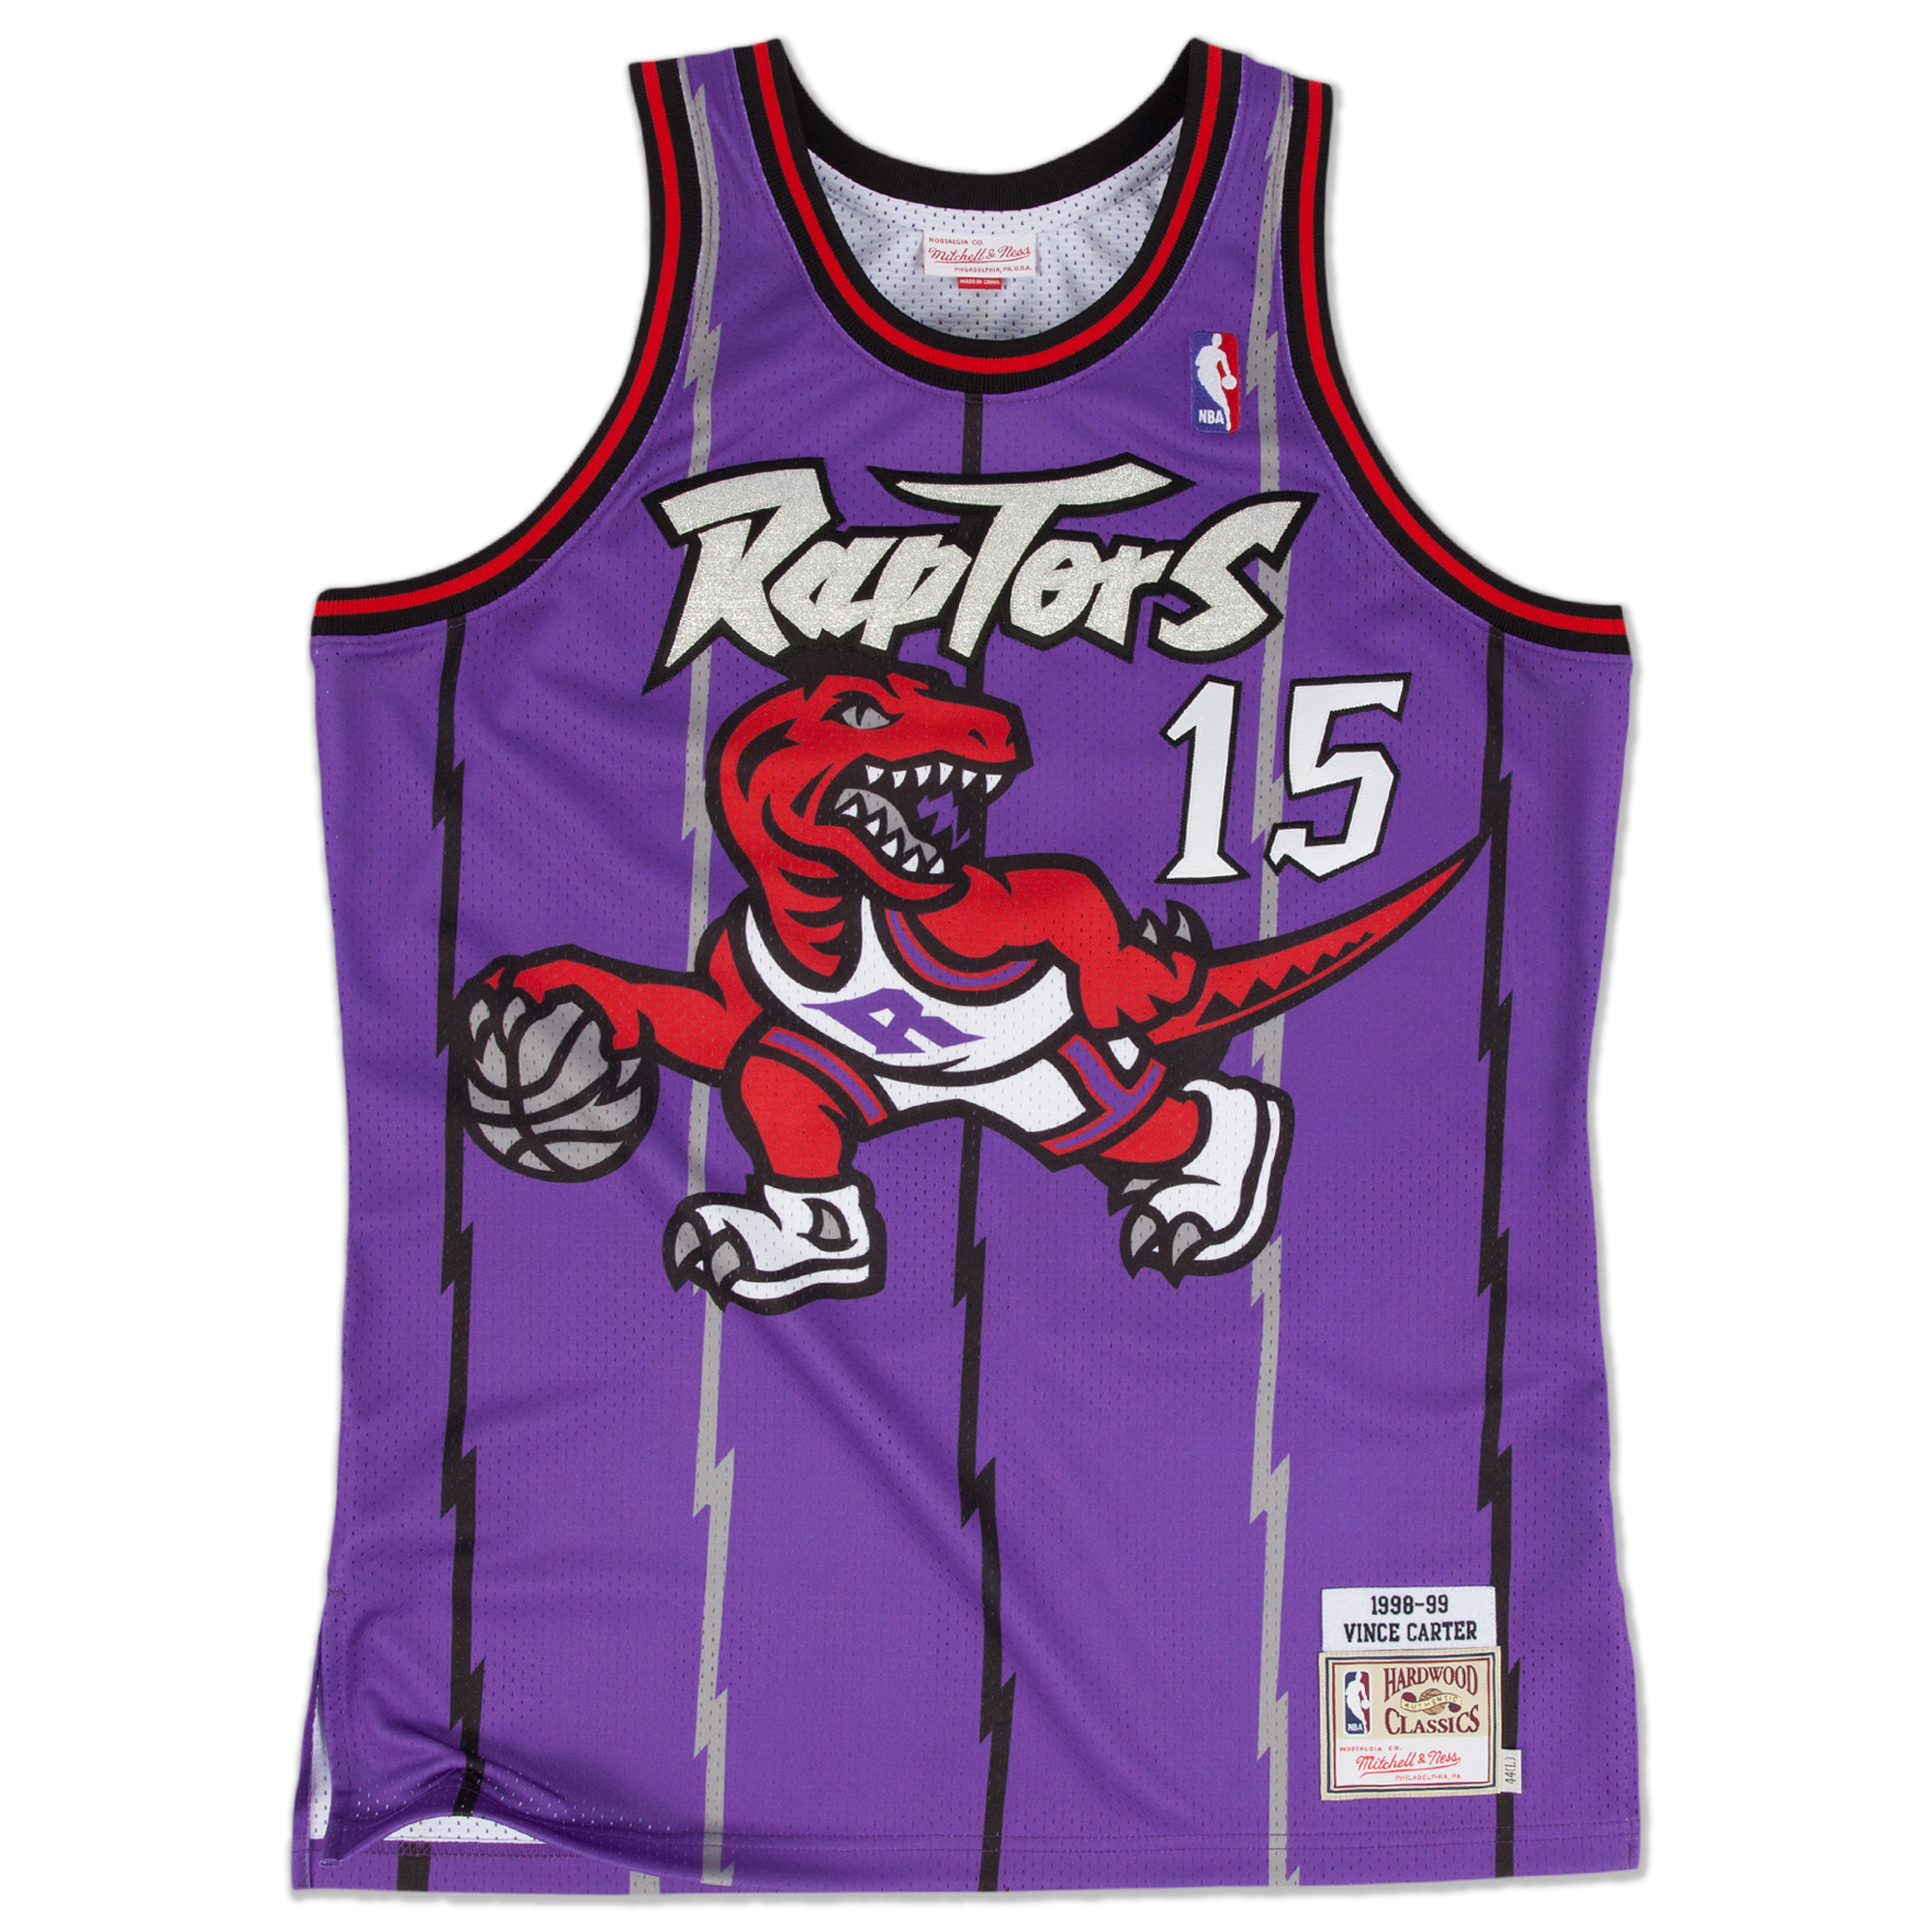 Raptors_95-99.jpeg